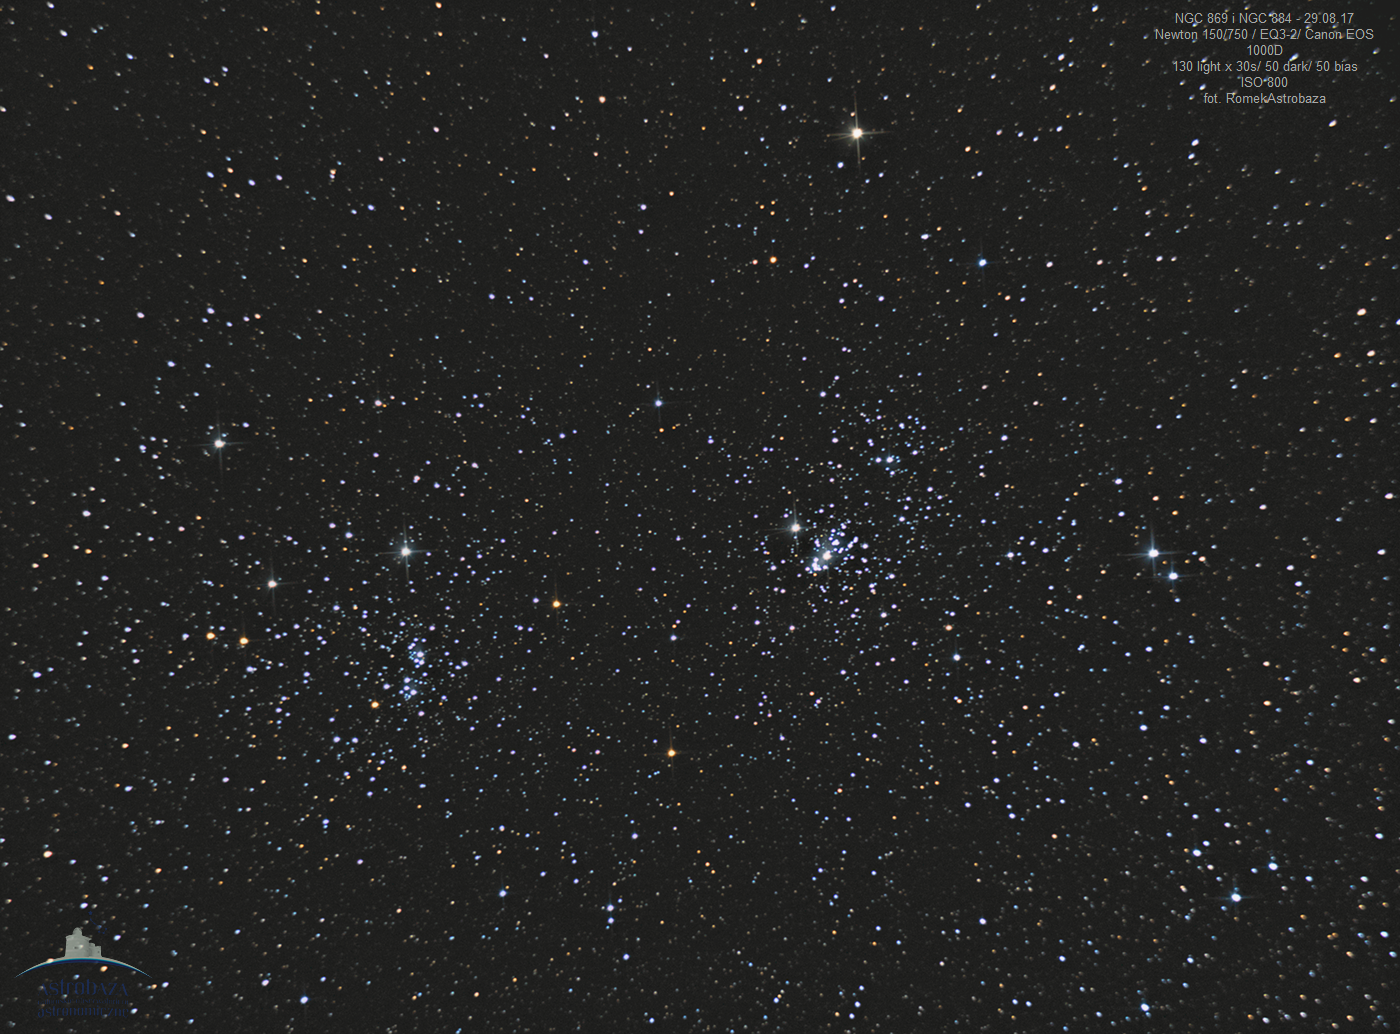 NGC869_884_130b_2a.png